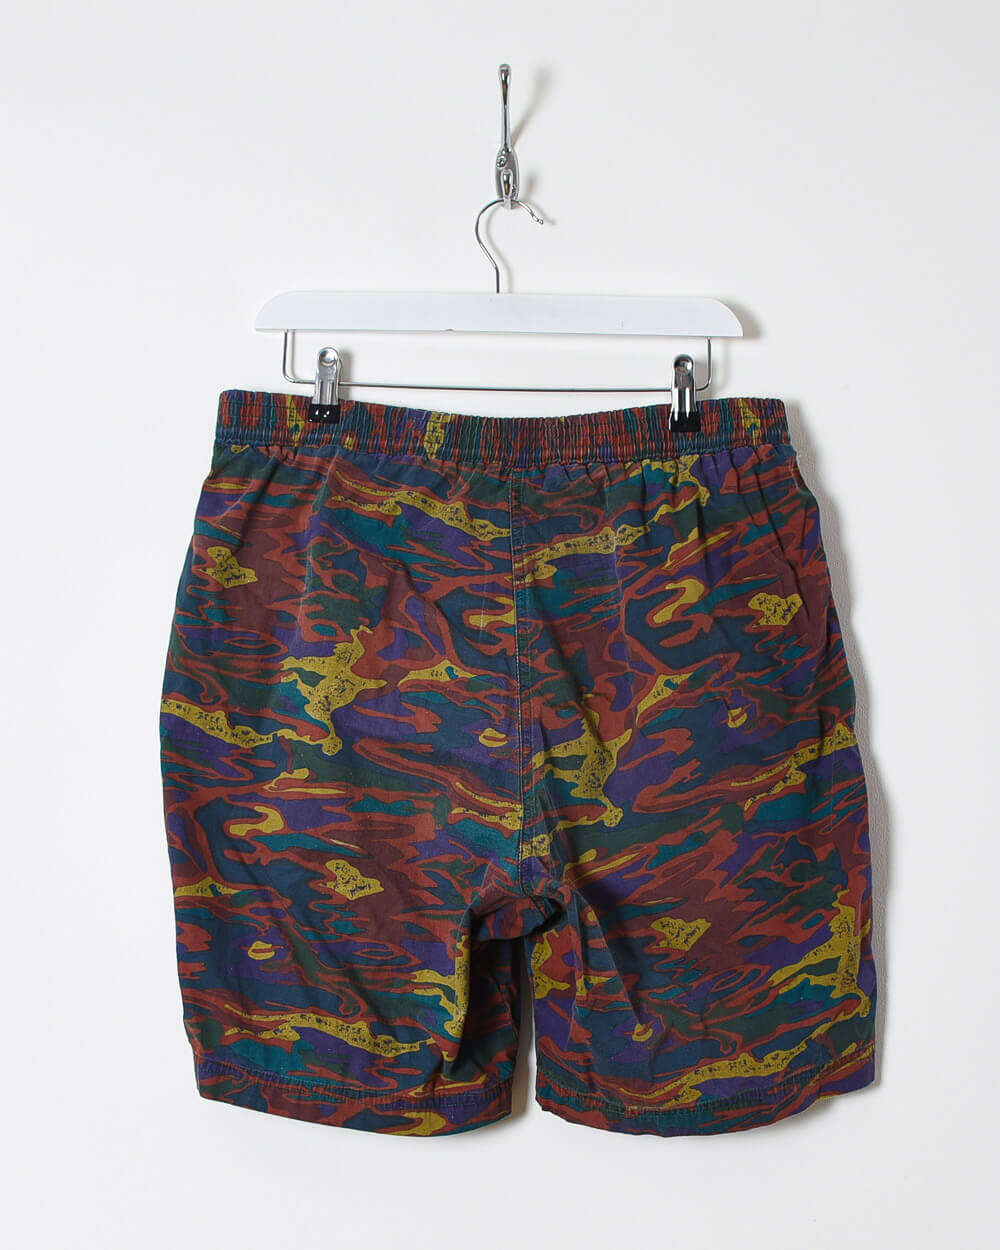 Vintage Swimwear Shorts - W34 L19 - Domno Vintage 90s, 80s, 00s Retro and Vintage Clothing 